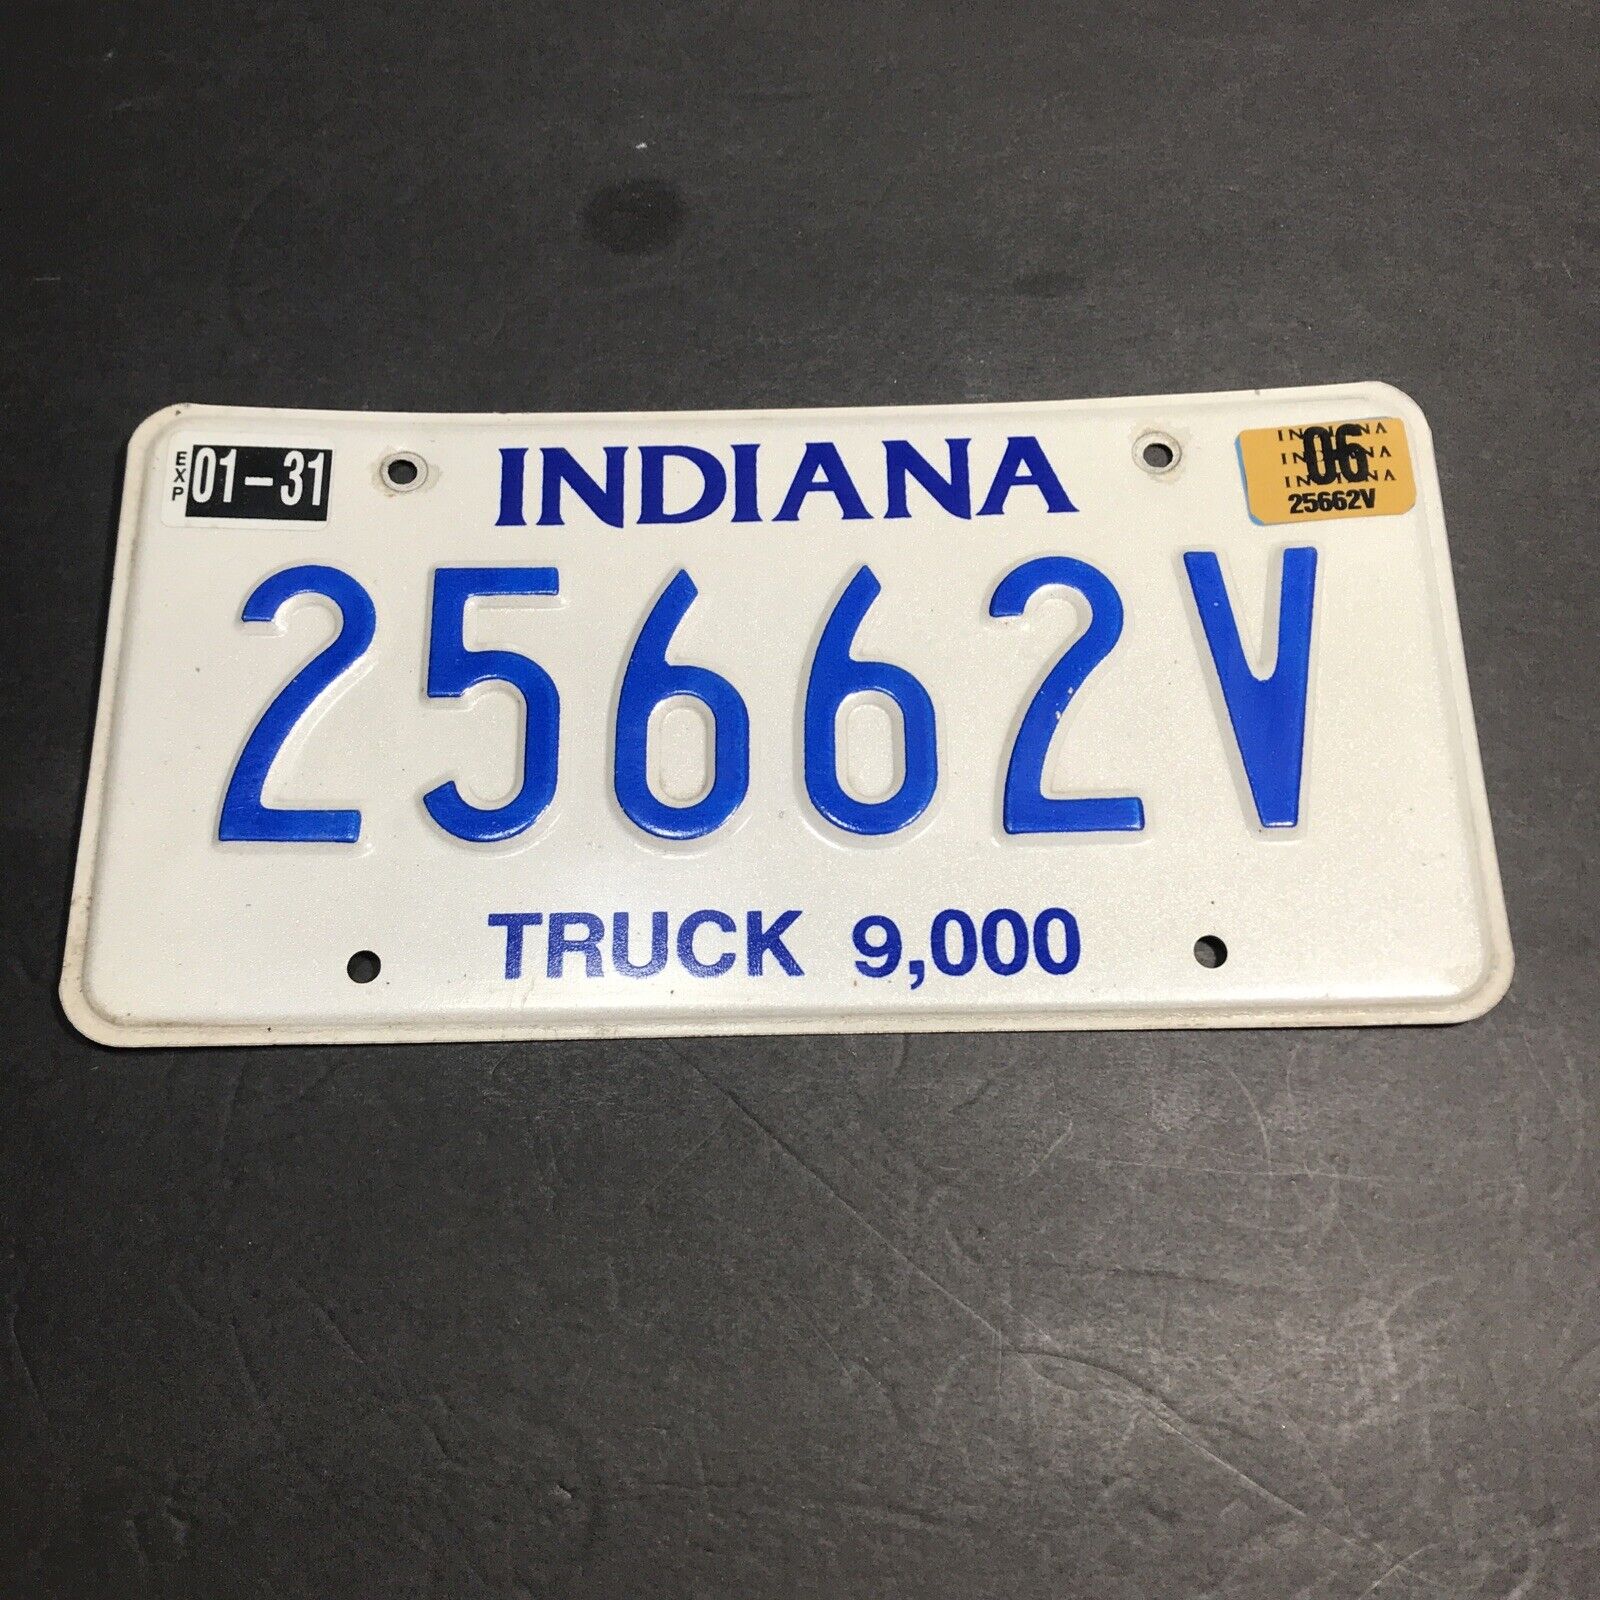 Indiana  2006 License Plate Truck 9,000 - 25662V